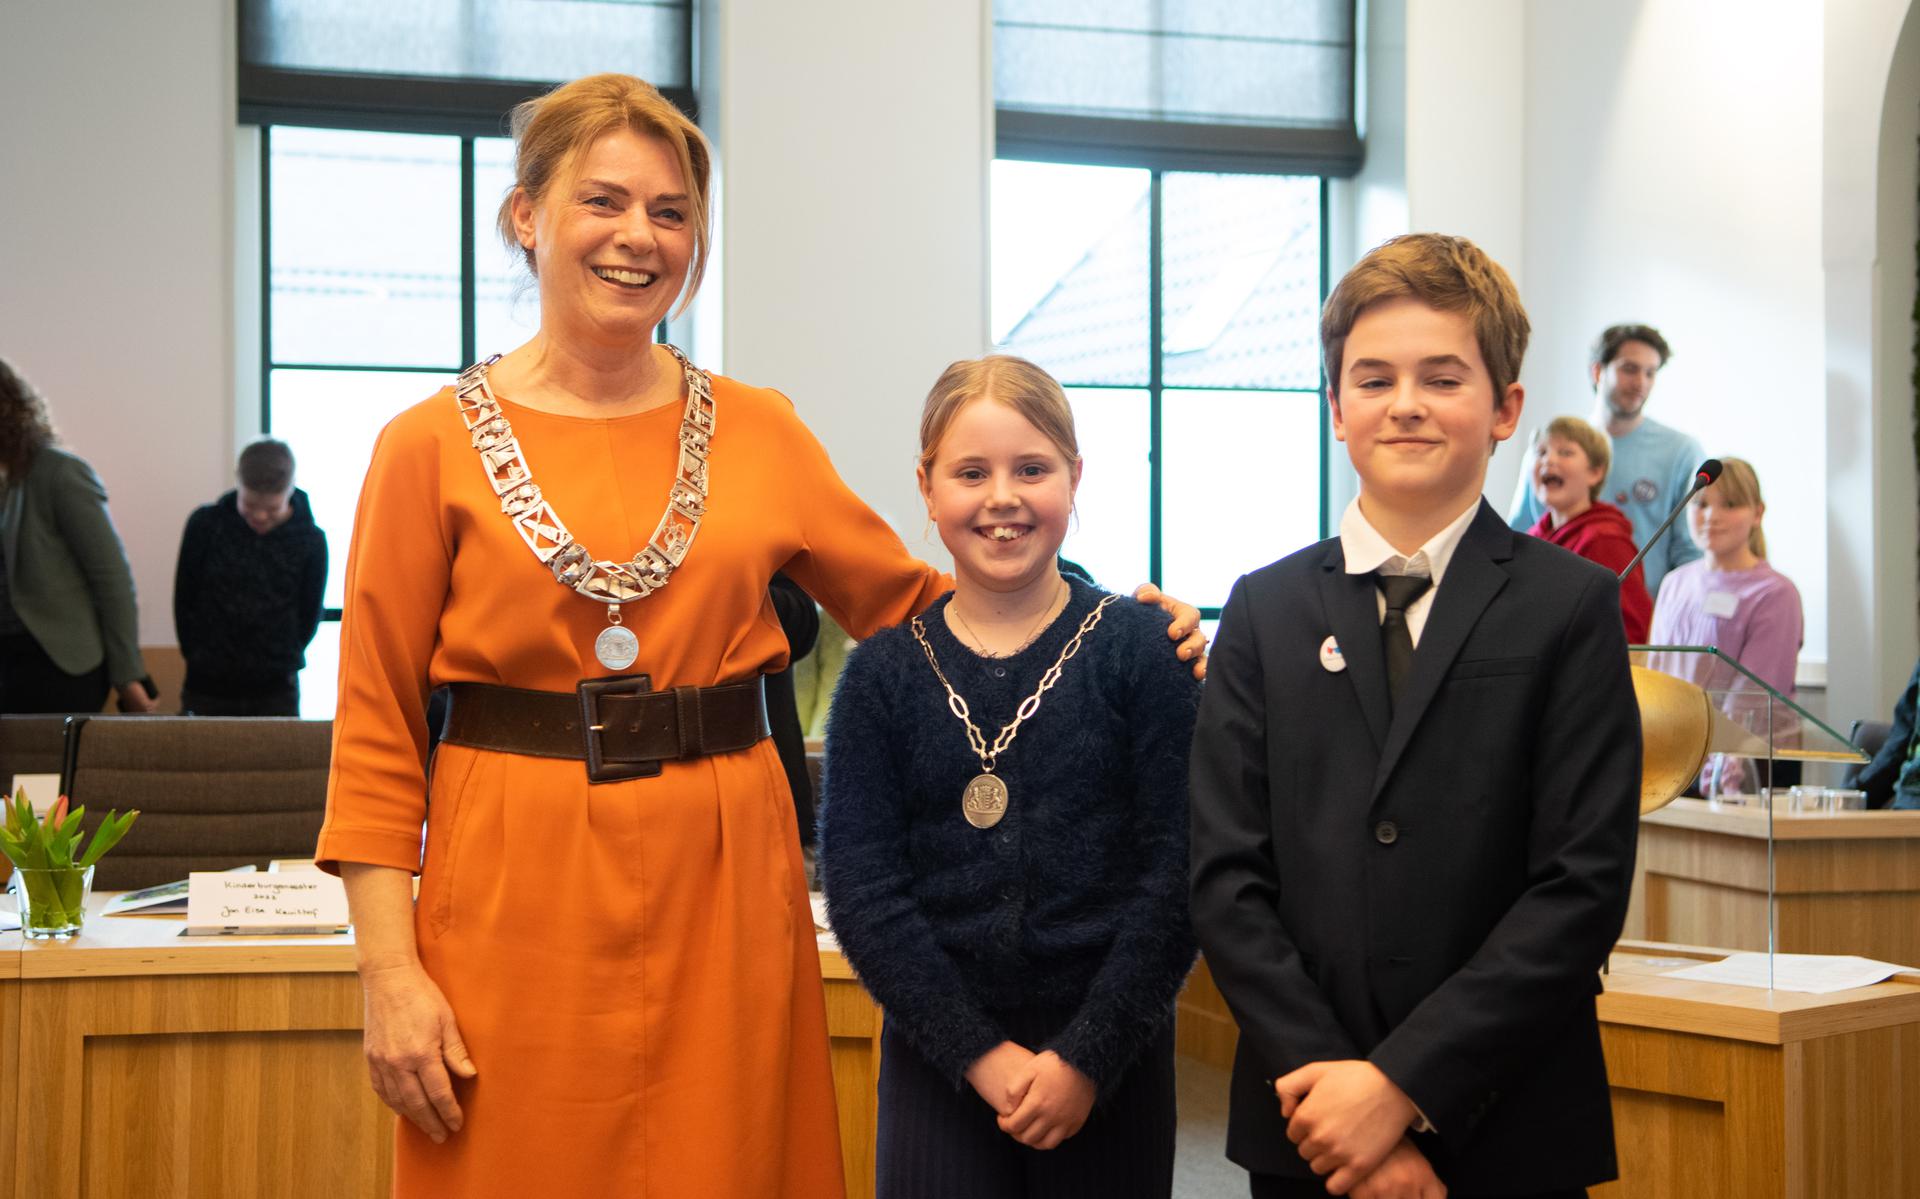 Burgemeester Jannewietske de Vries samen met de nieuwe kinderburgemeester Noor Bosman (midden) en Jan Eise Kruithof (rechts) die afzwaaide als kinderburgemeester. 